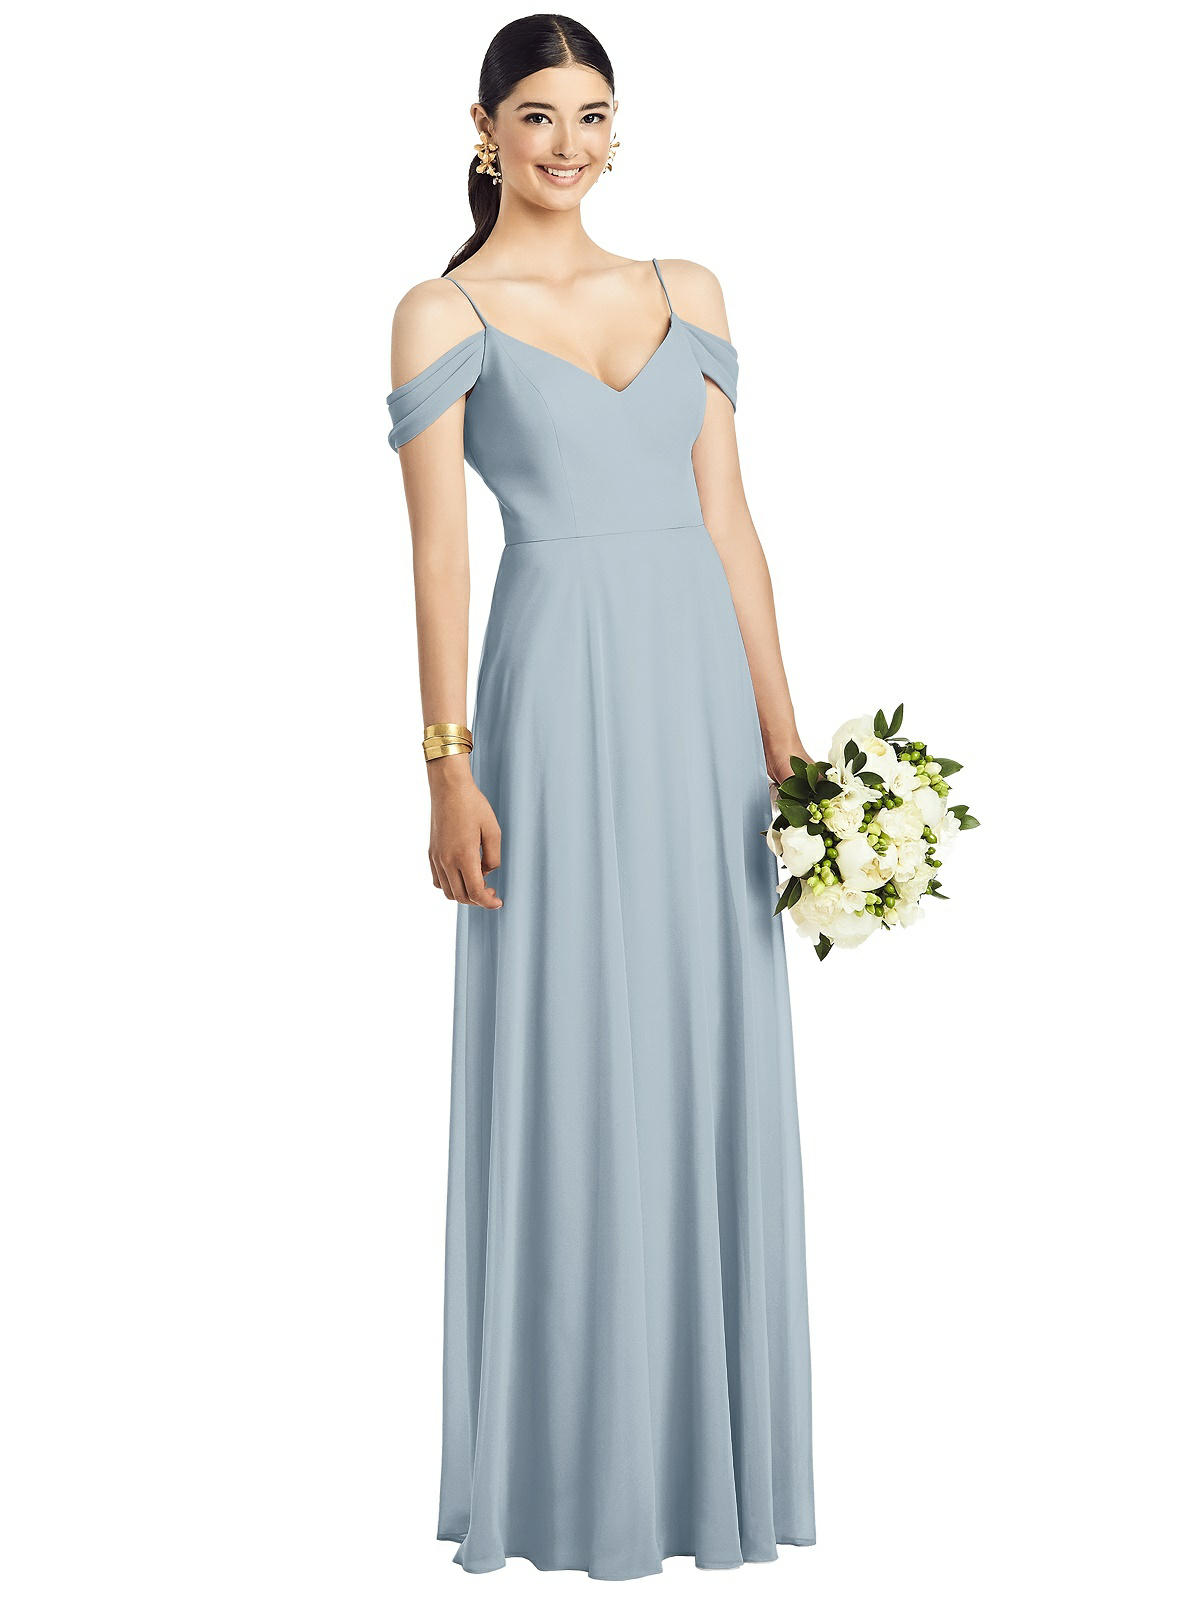 Eliza Mist Blue Bridesmaid Dress by Dessy